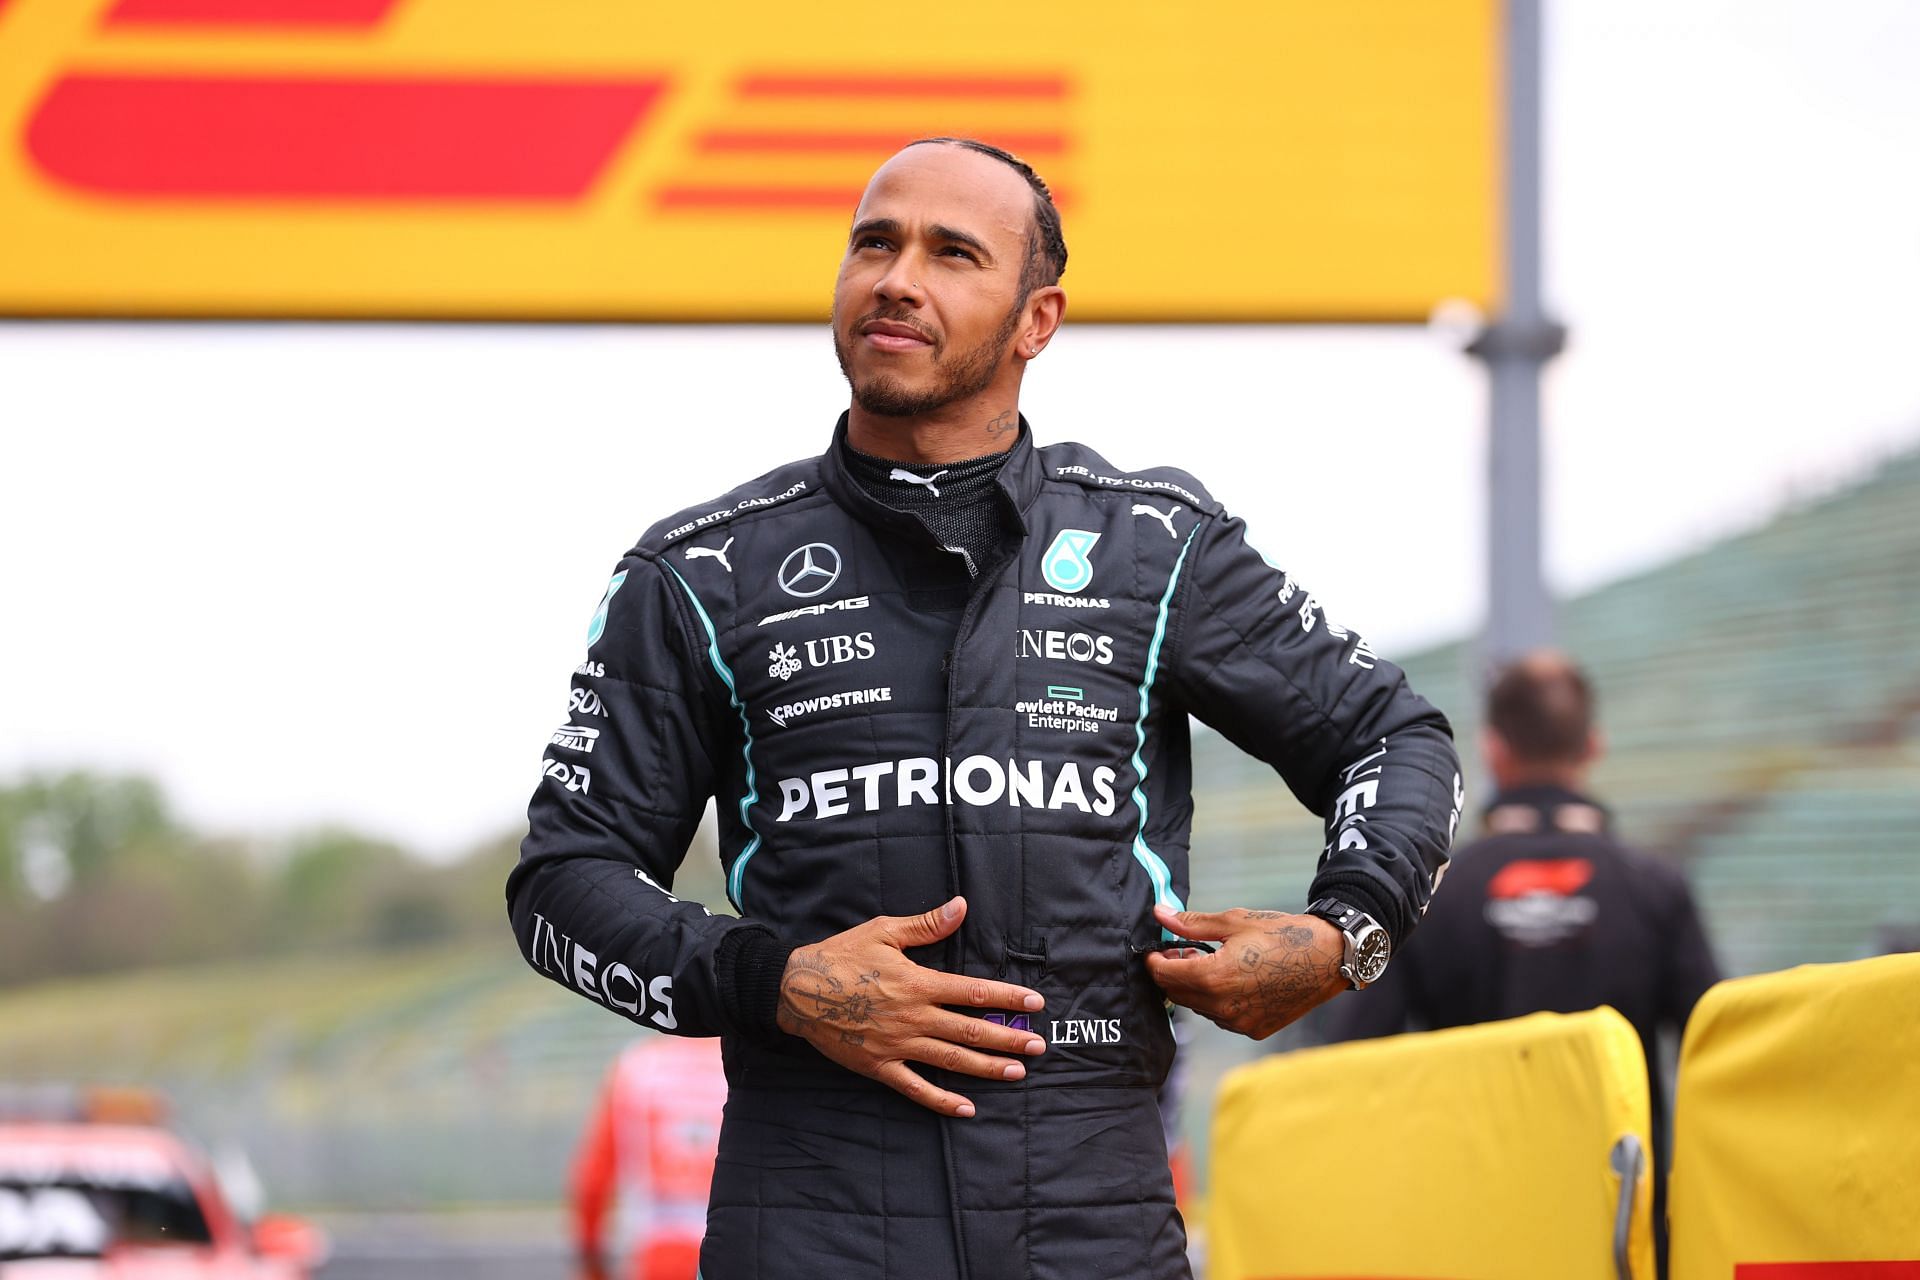 Lewis Hamilton qualified on pole the last time F1 visited Imola